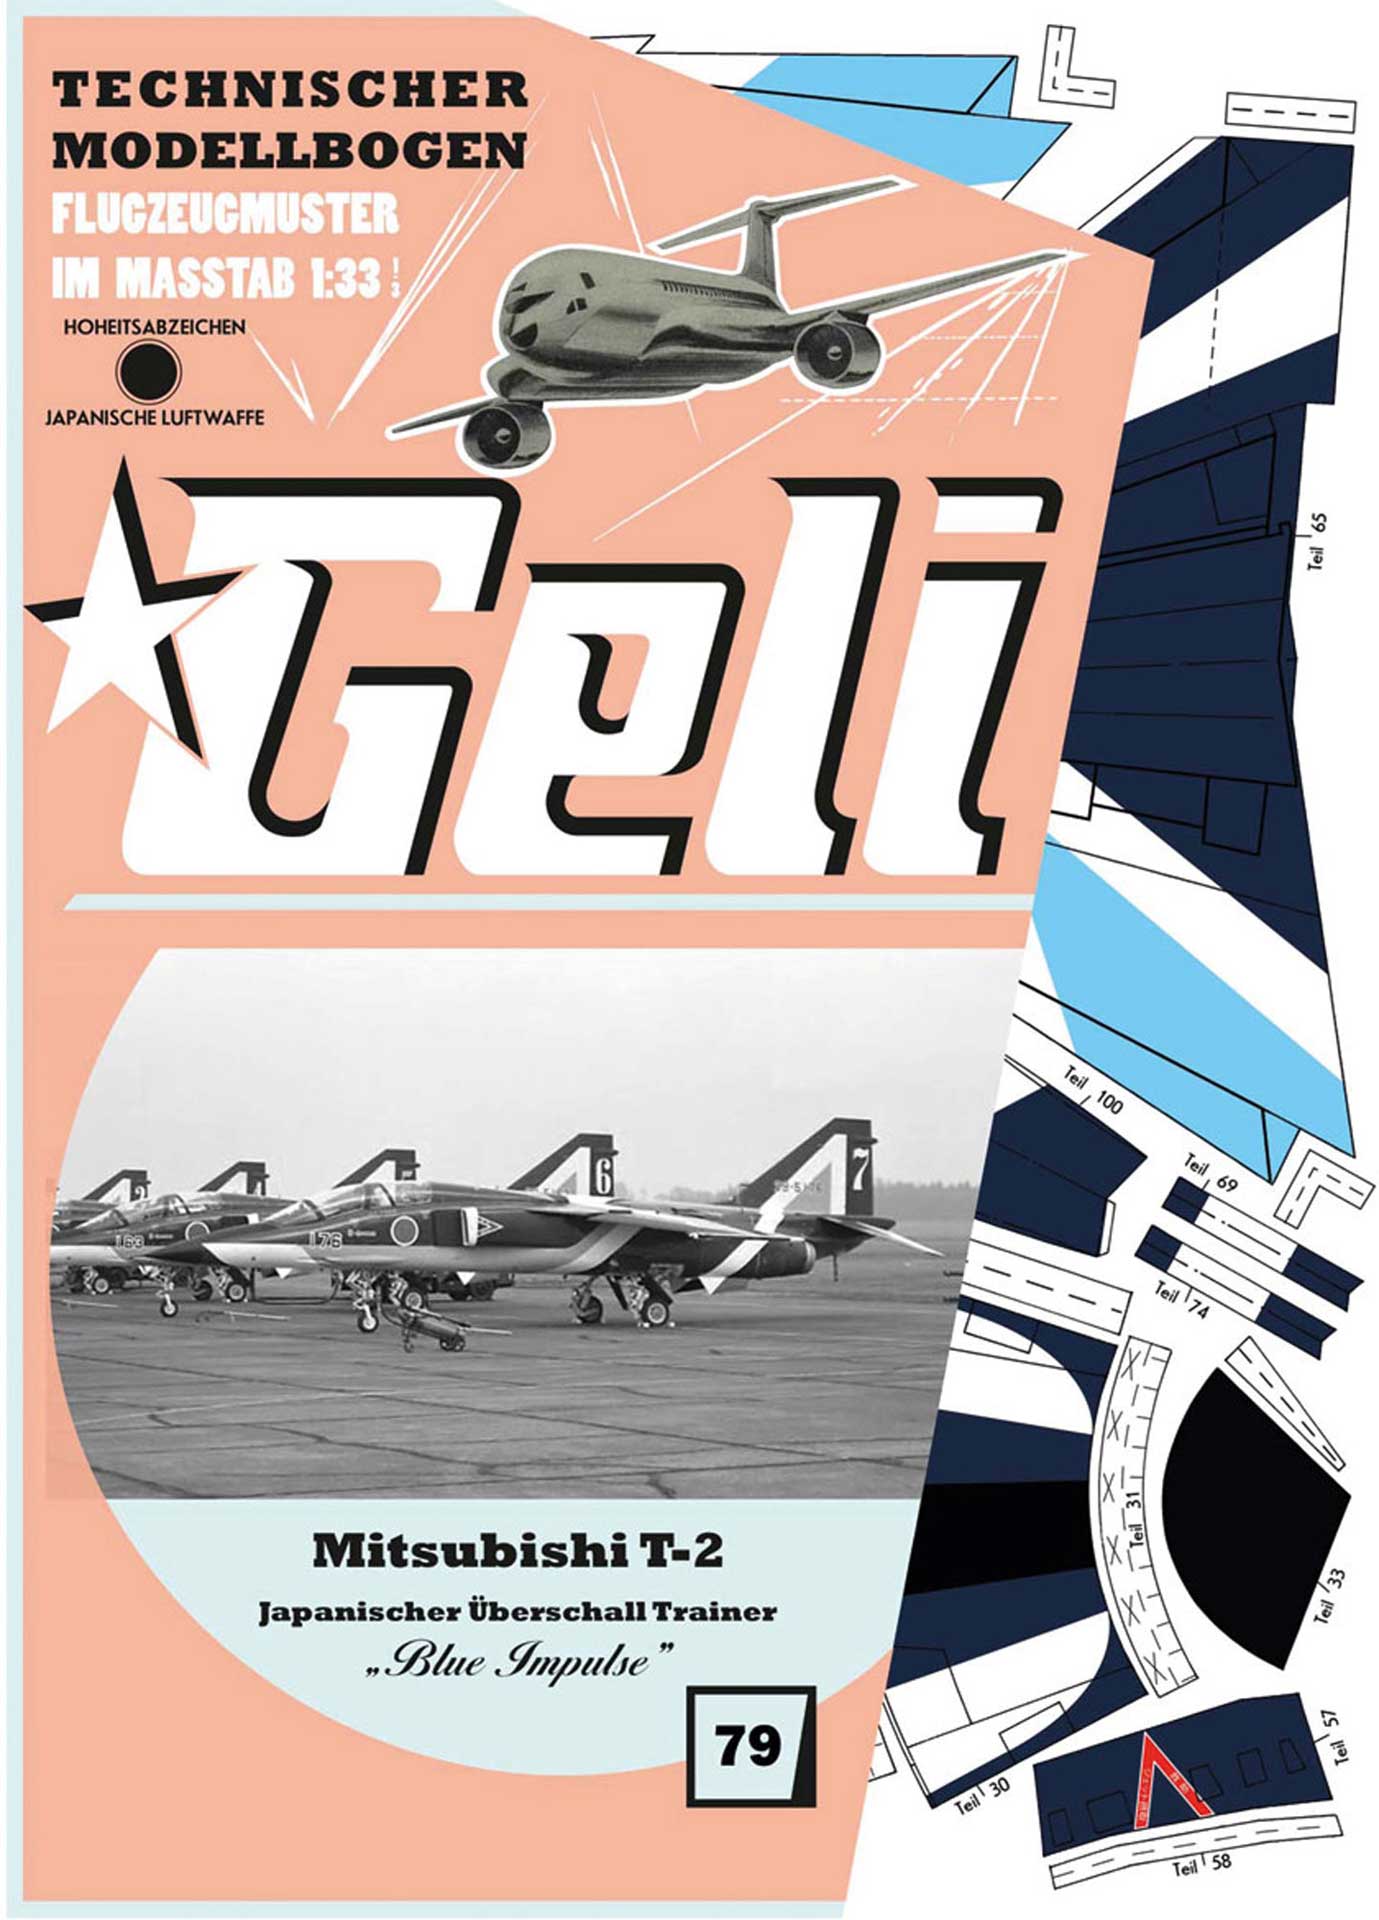 GELI MITSUBISHI T-2 # 79 CARDBOARD MODEL